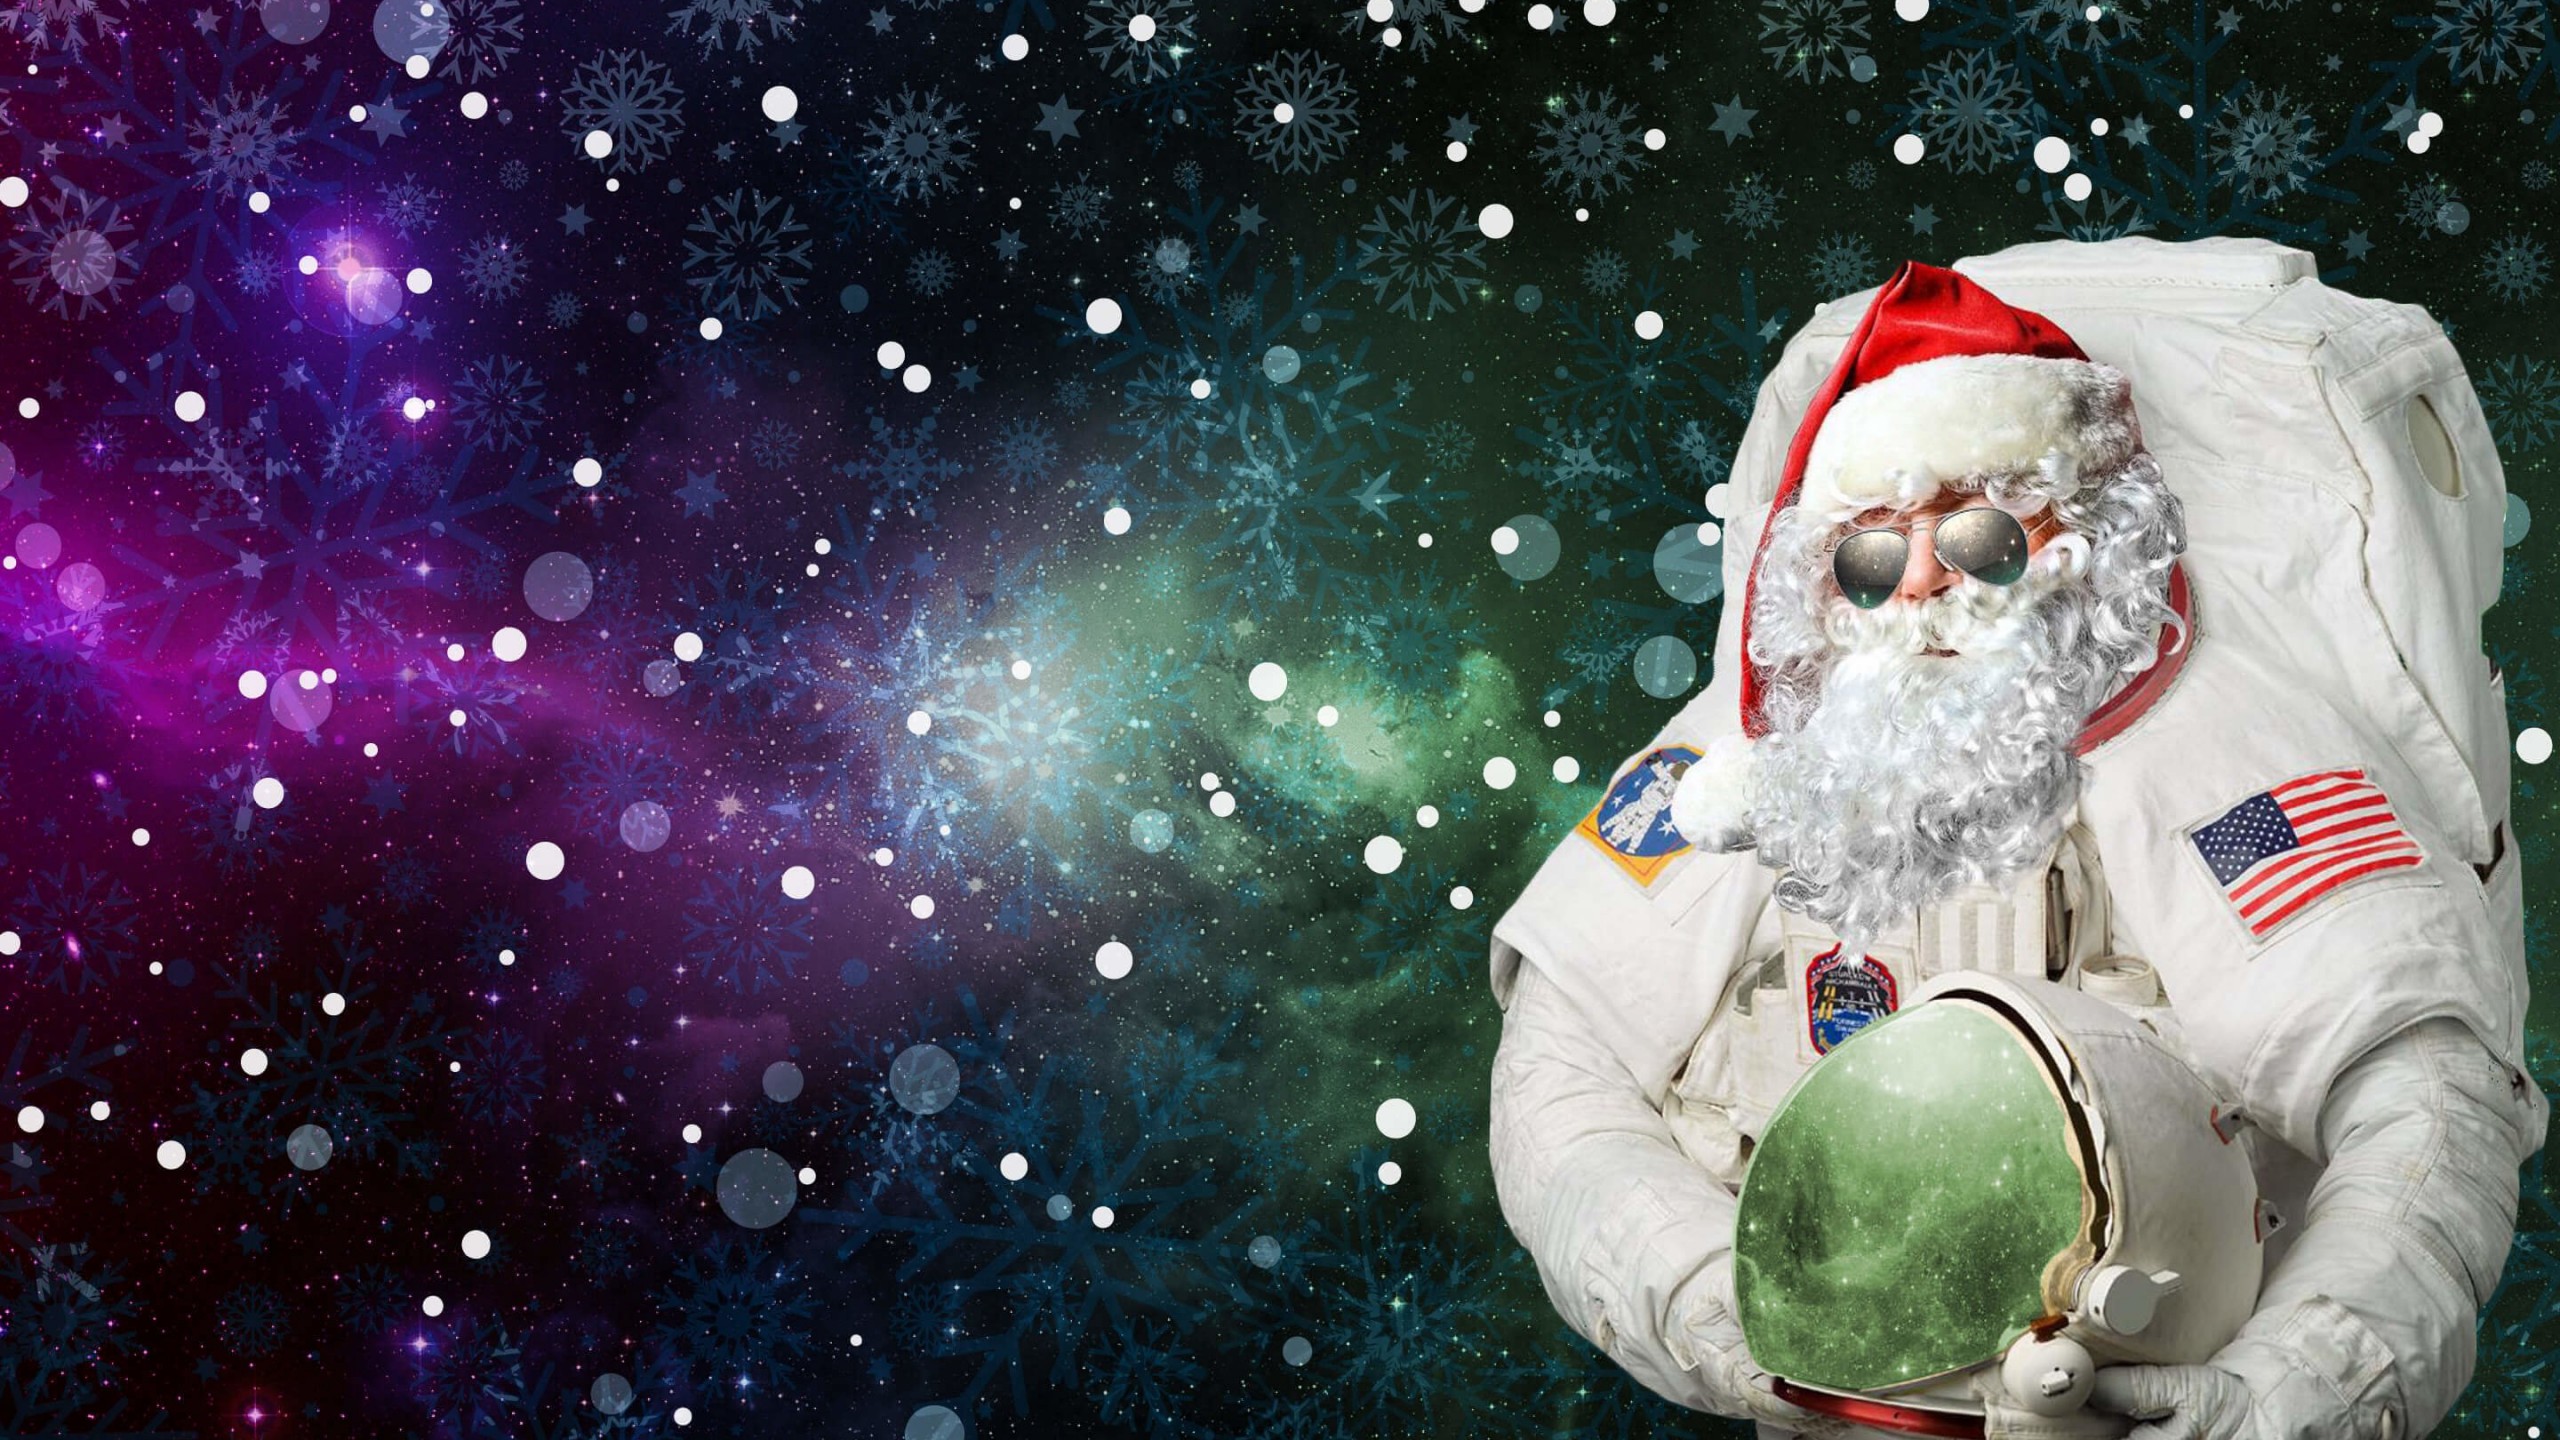 Astro Santa Wallpaper for Desktop 2560x1440